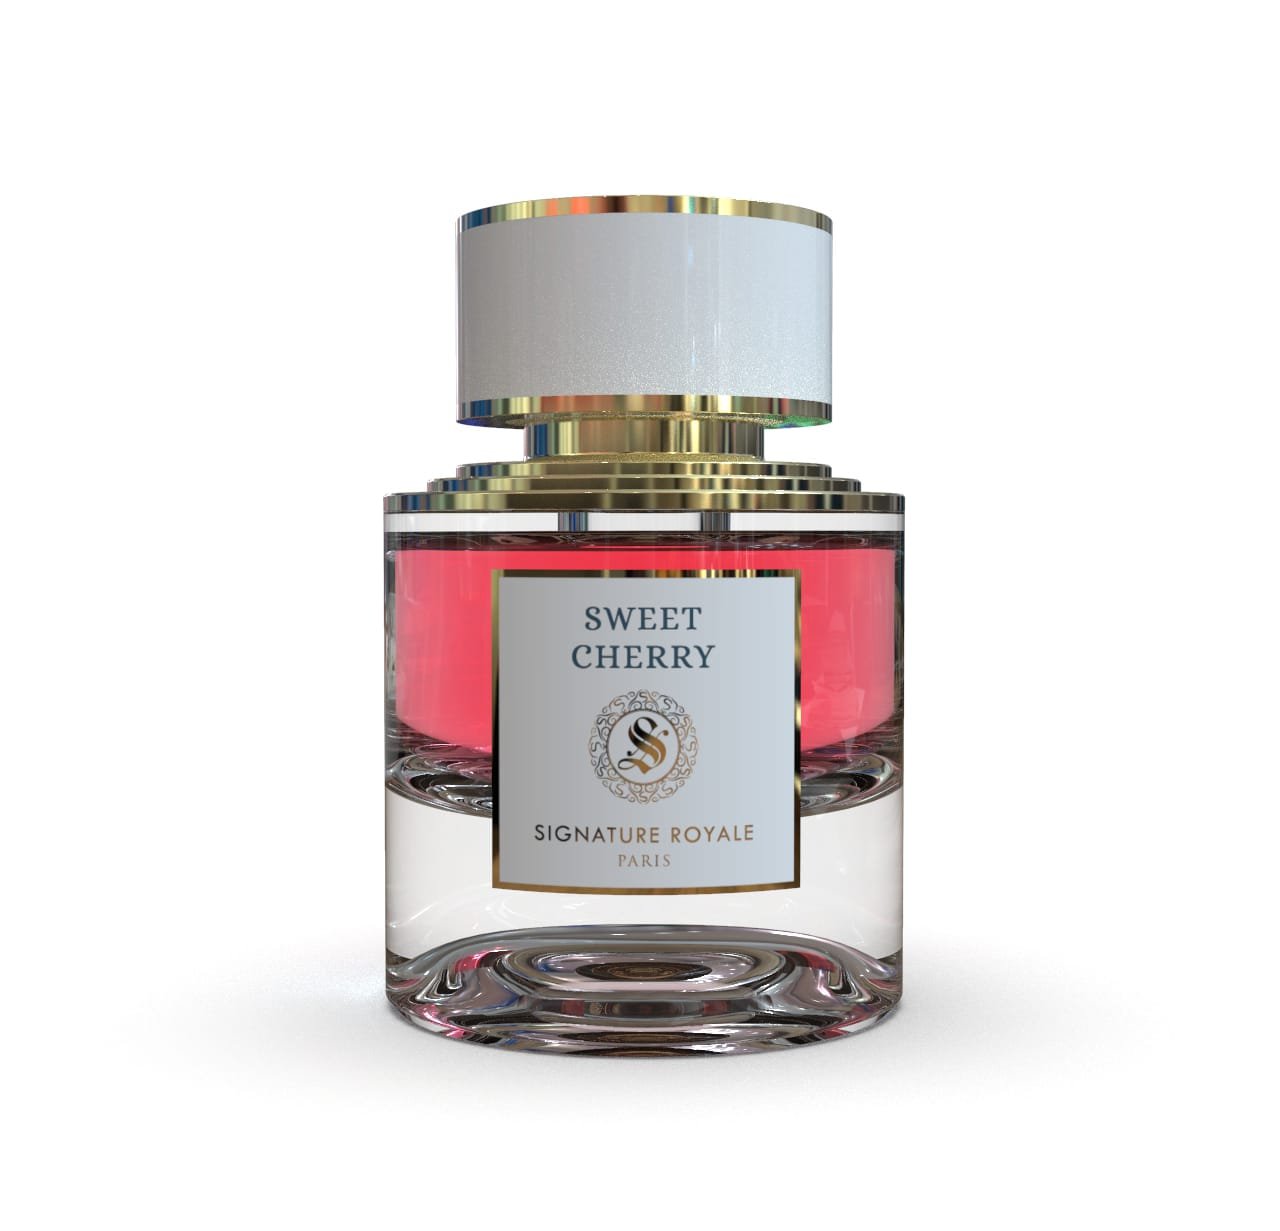 Sweet Cherry signature royale parfum